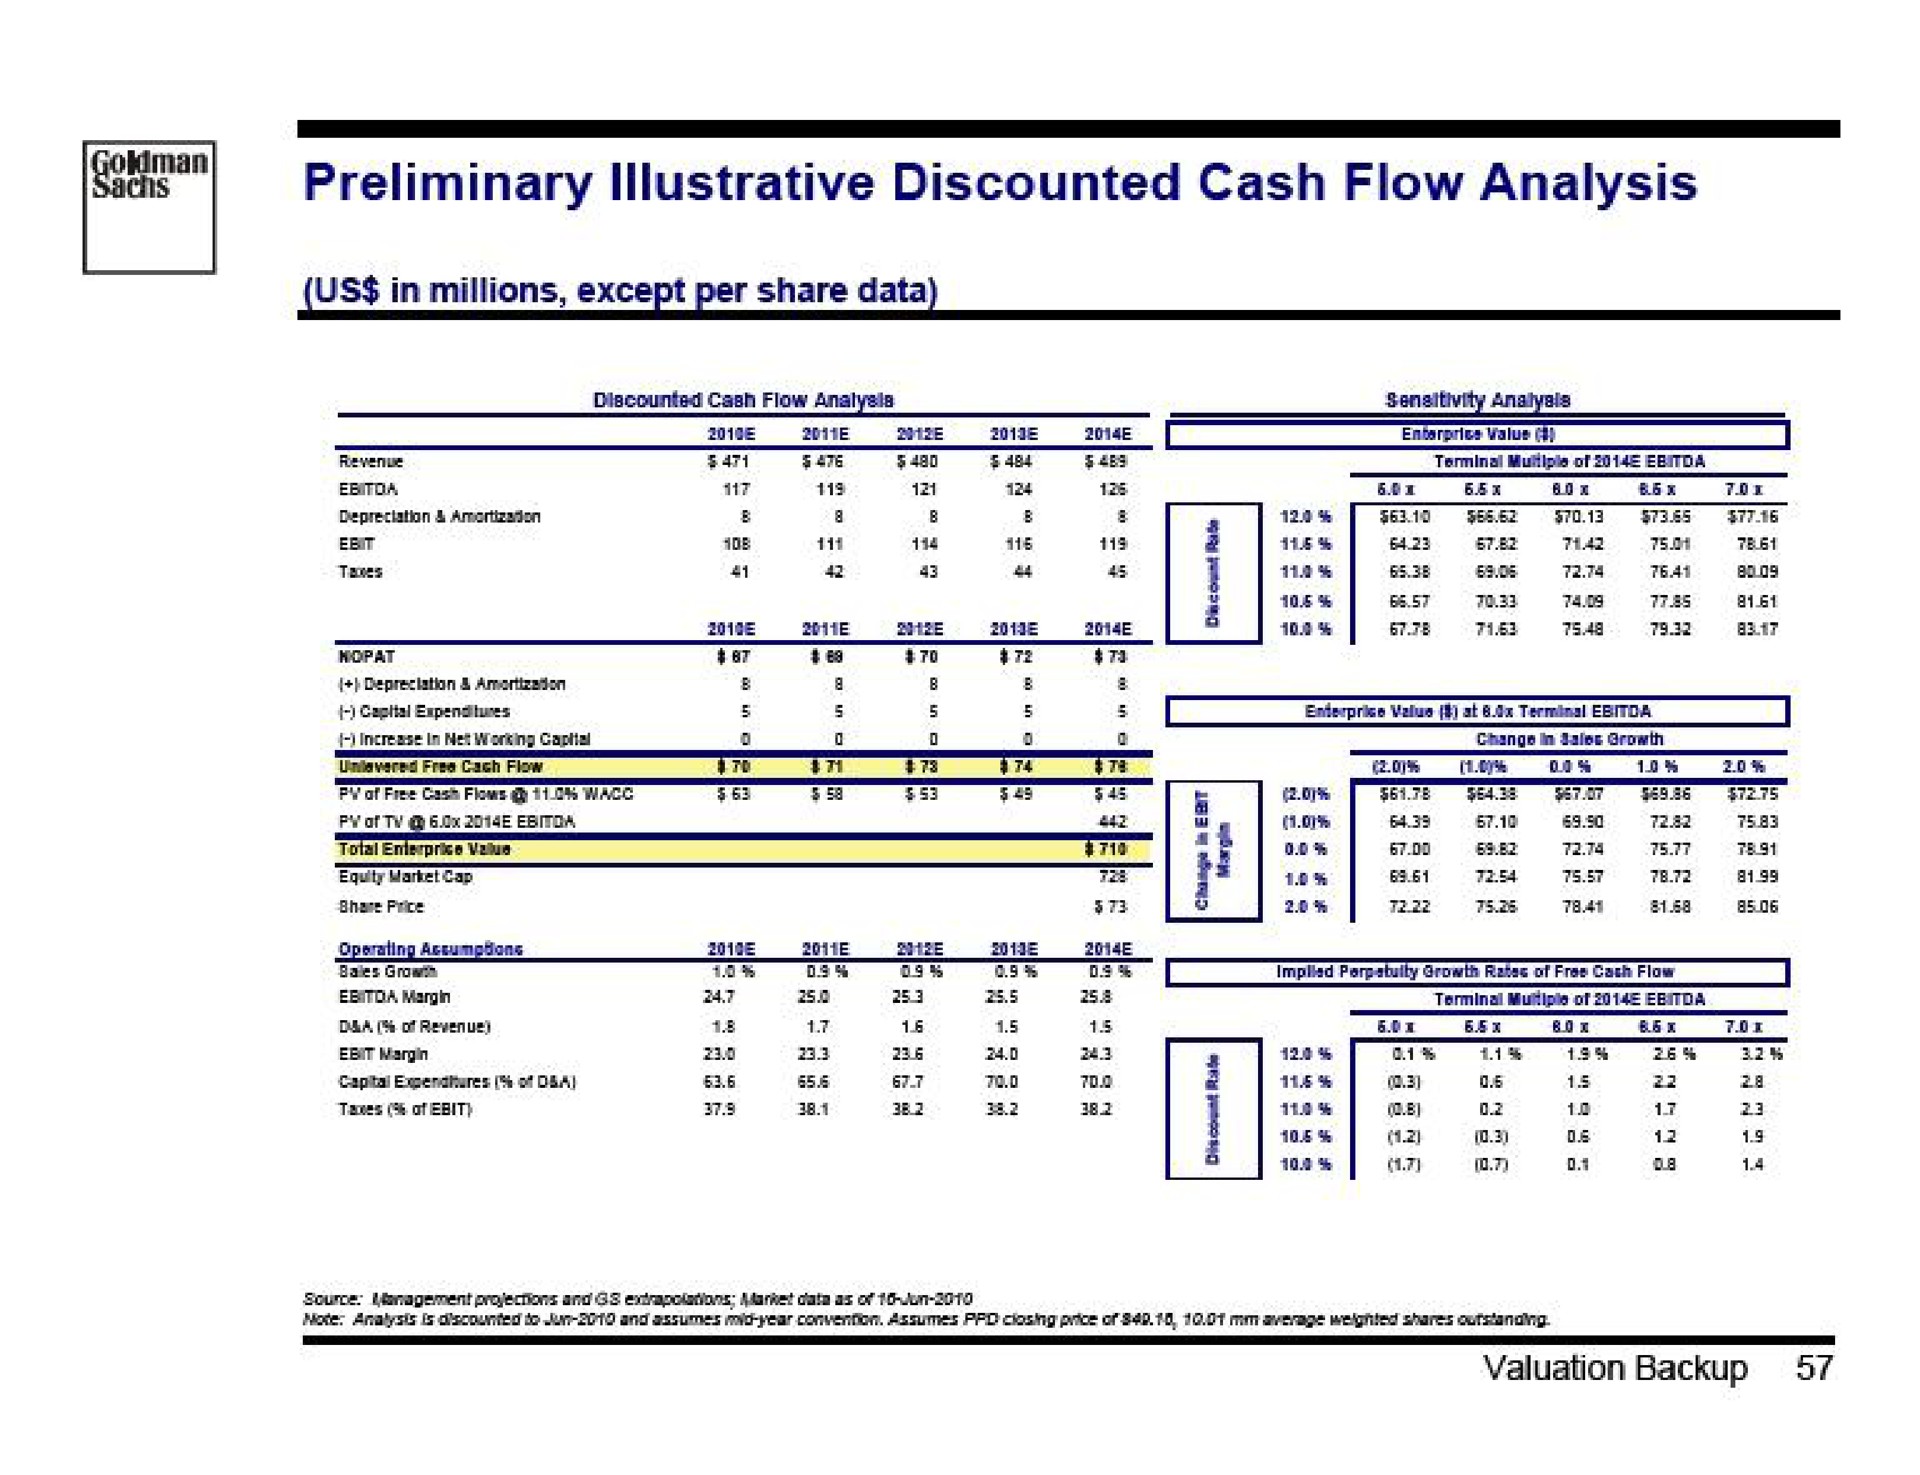 preliminary illustrative discounted cash flow analysis | Goldman Sachs